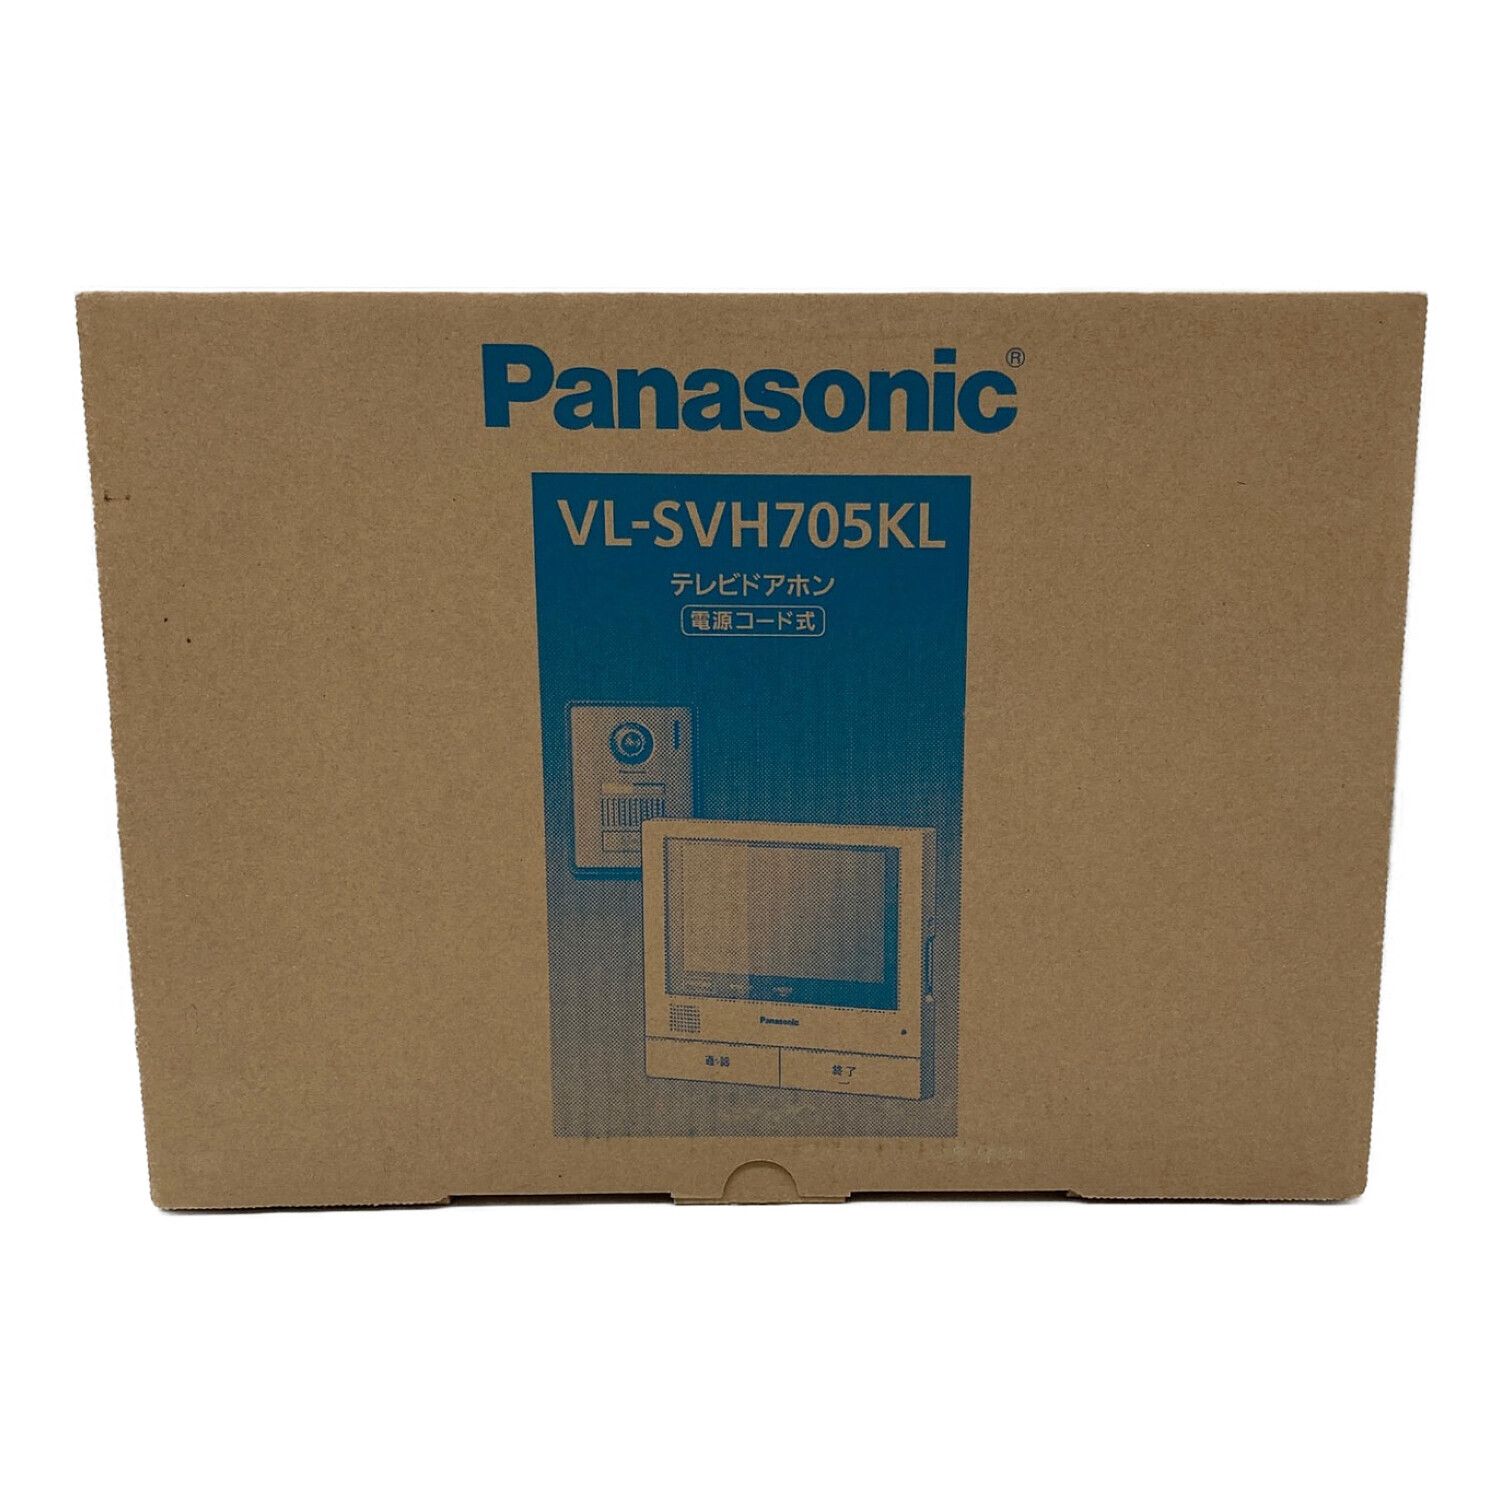 Panasonic VL-SVH705KL テレビドアホン パナソニック-